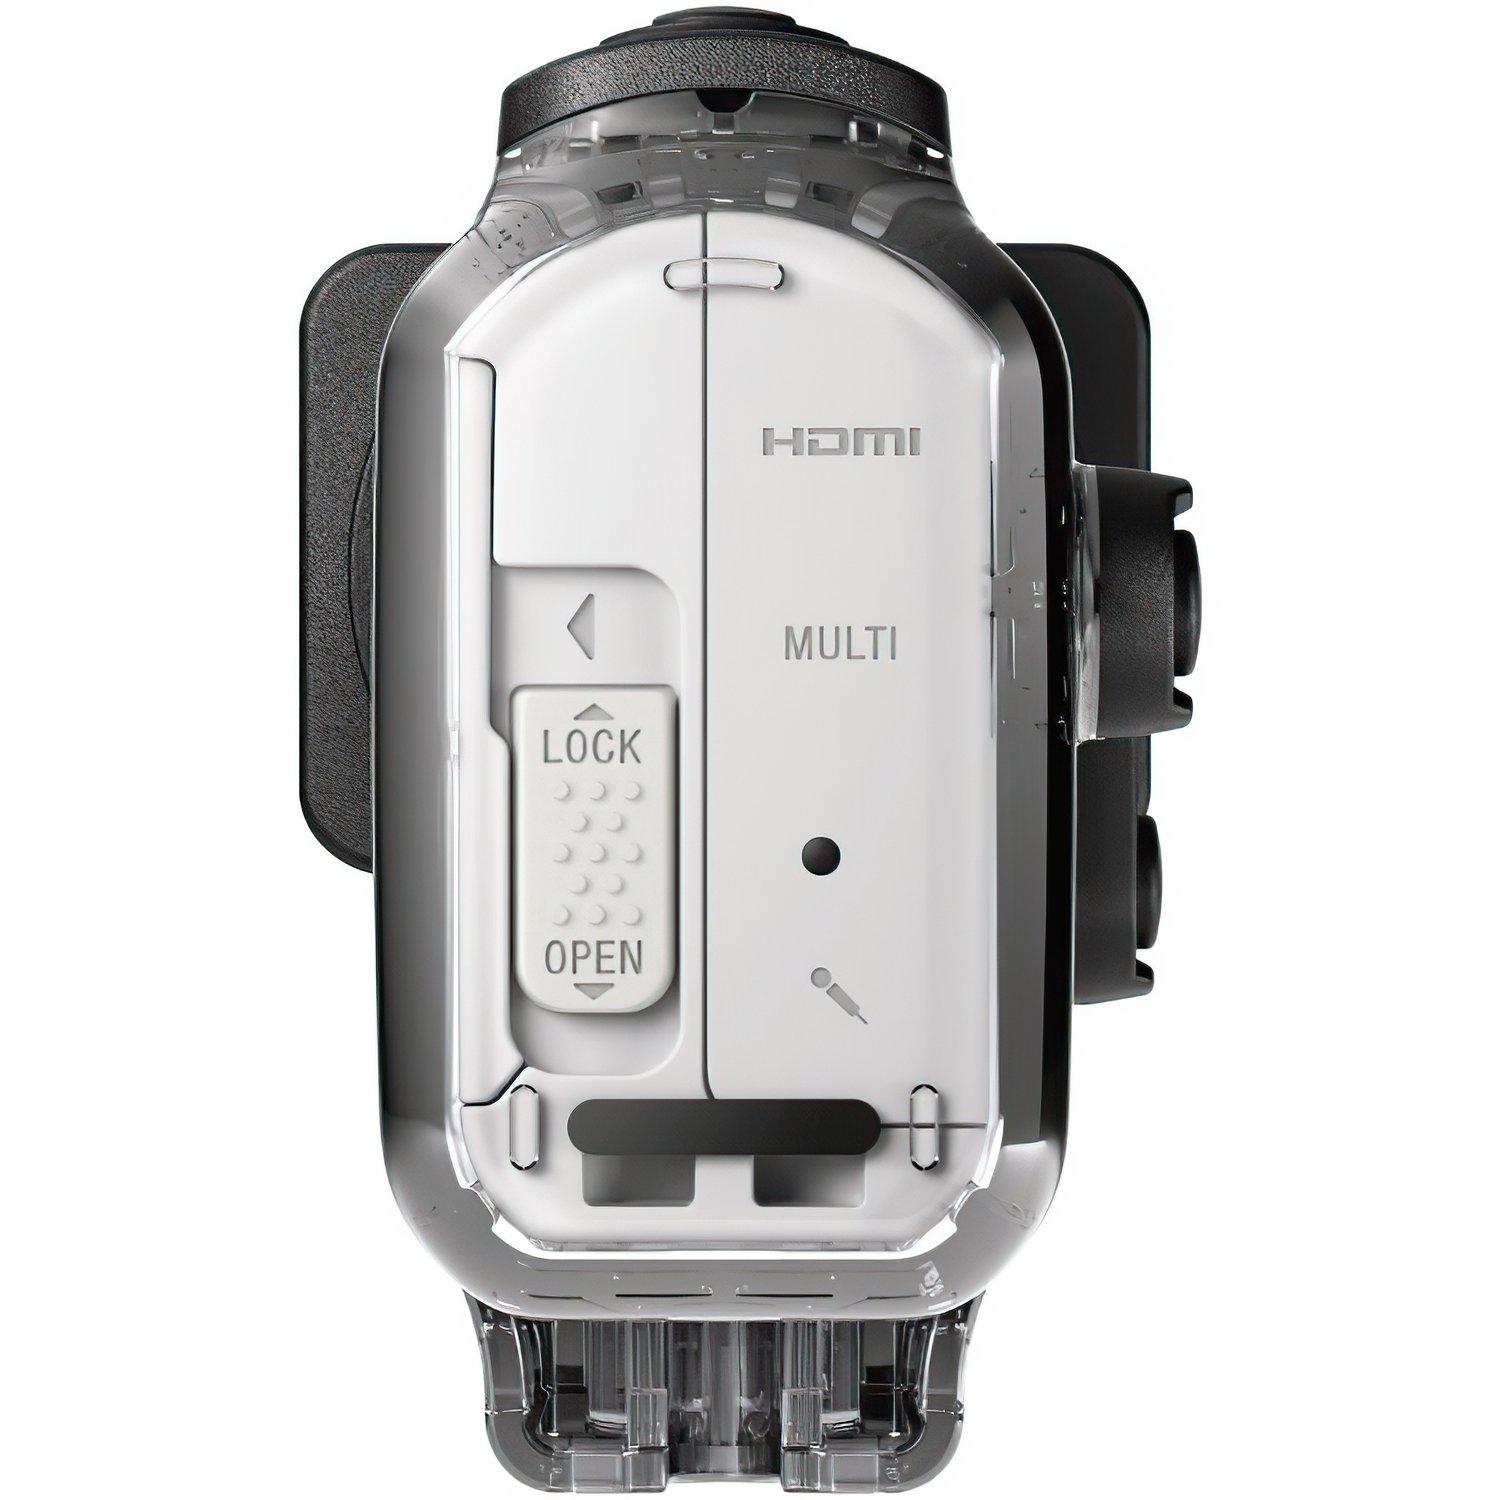 Экшн-камера SONY HDR-AS300 (HDRAS300.E35) фото 